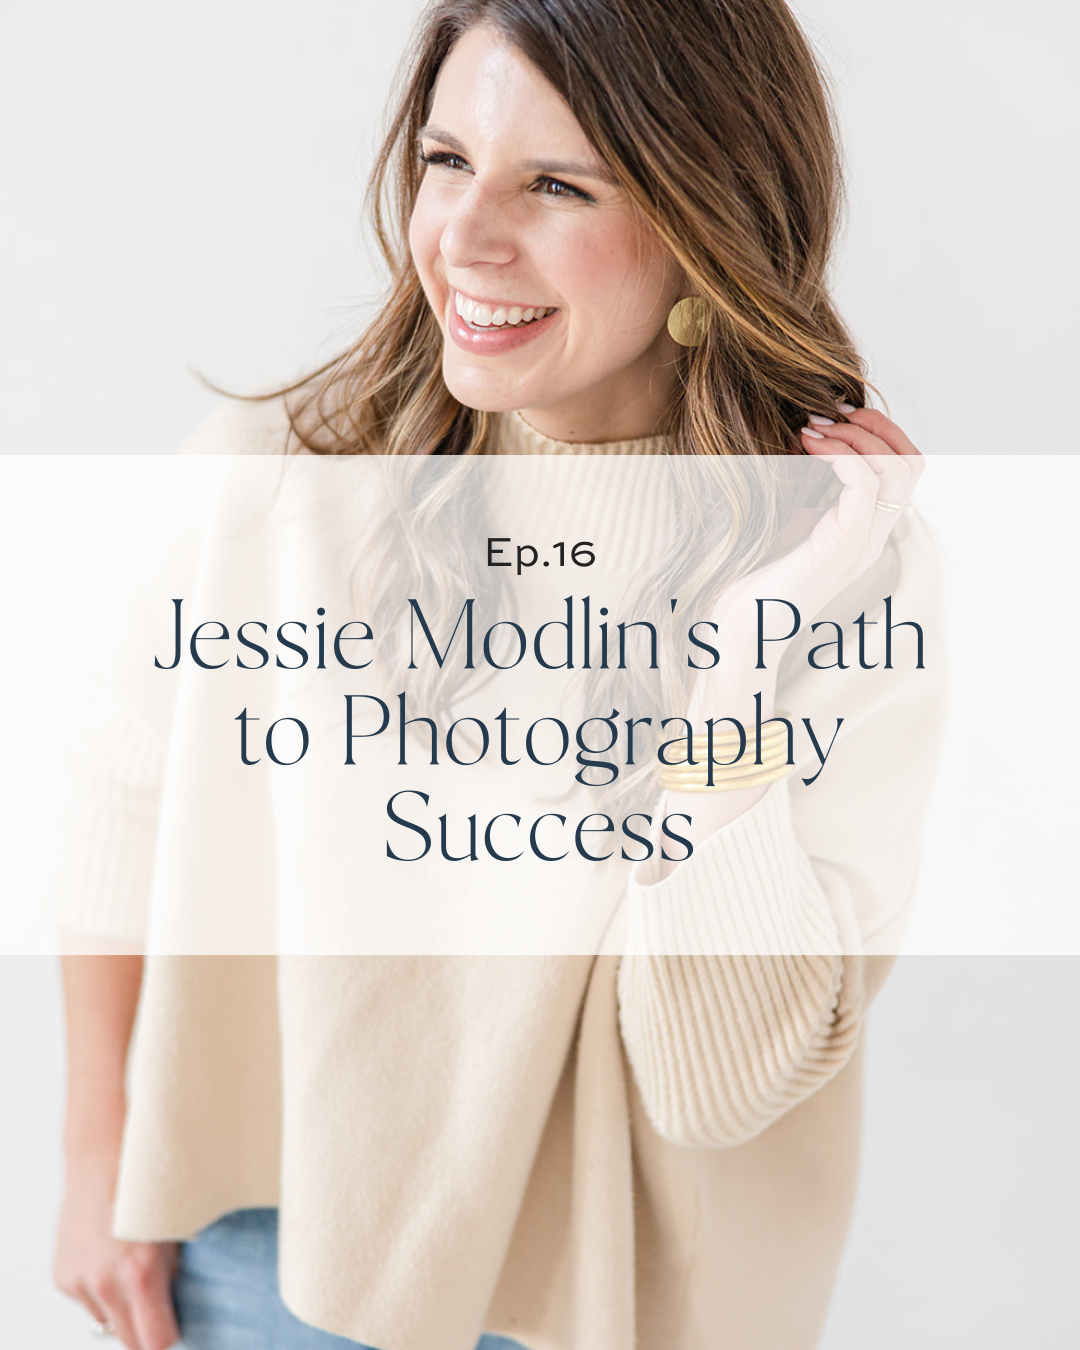 Jessie Modlin's Path to Photography Success